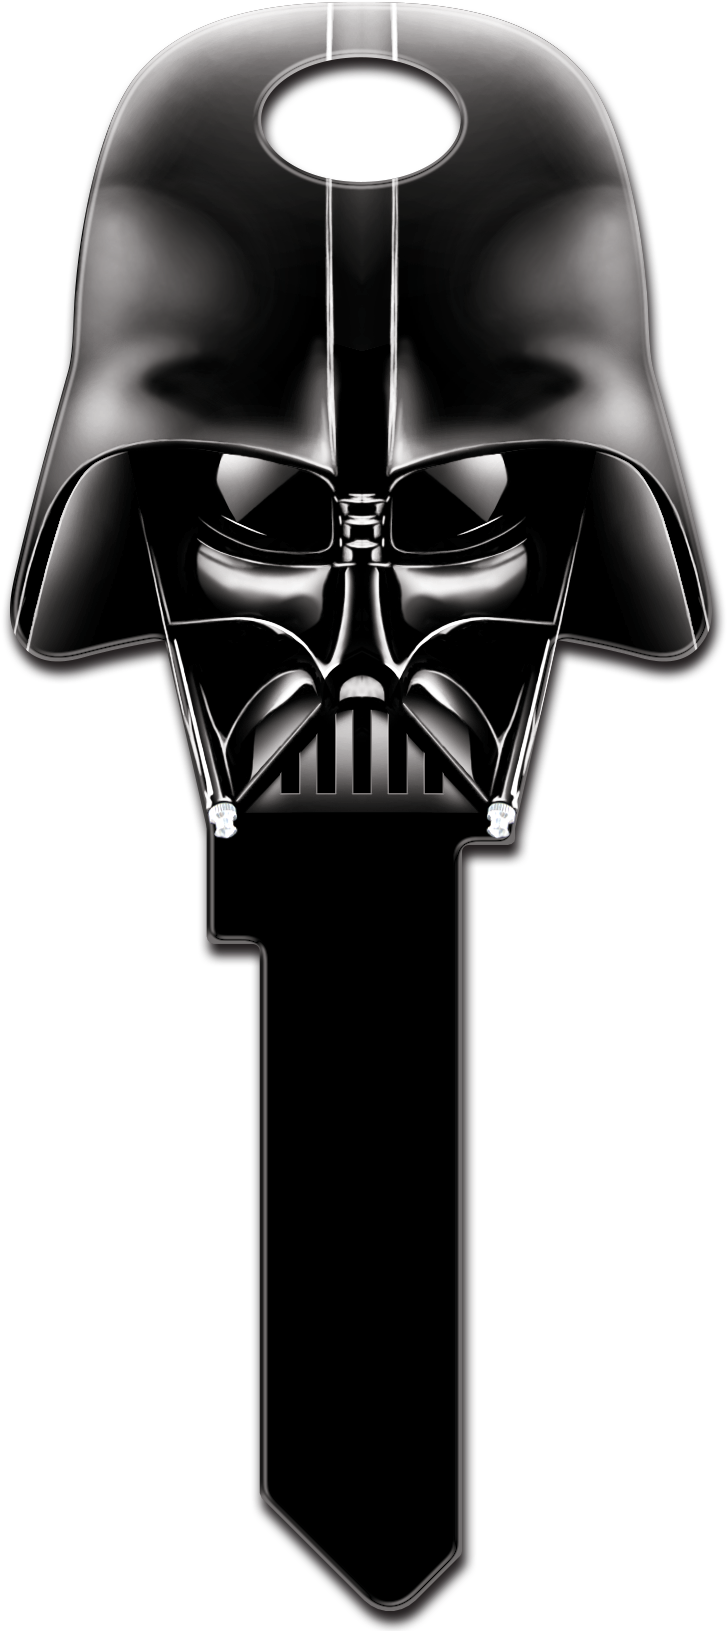 Darth Vader Casco PNG Immagine di immagine